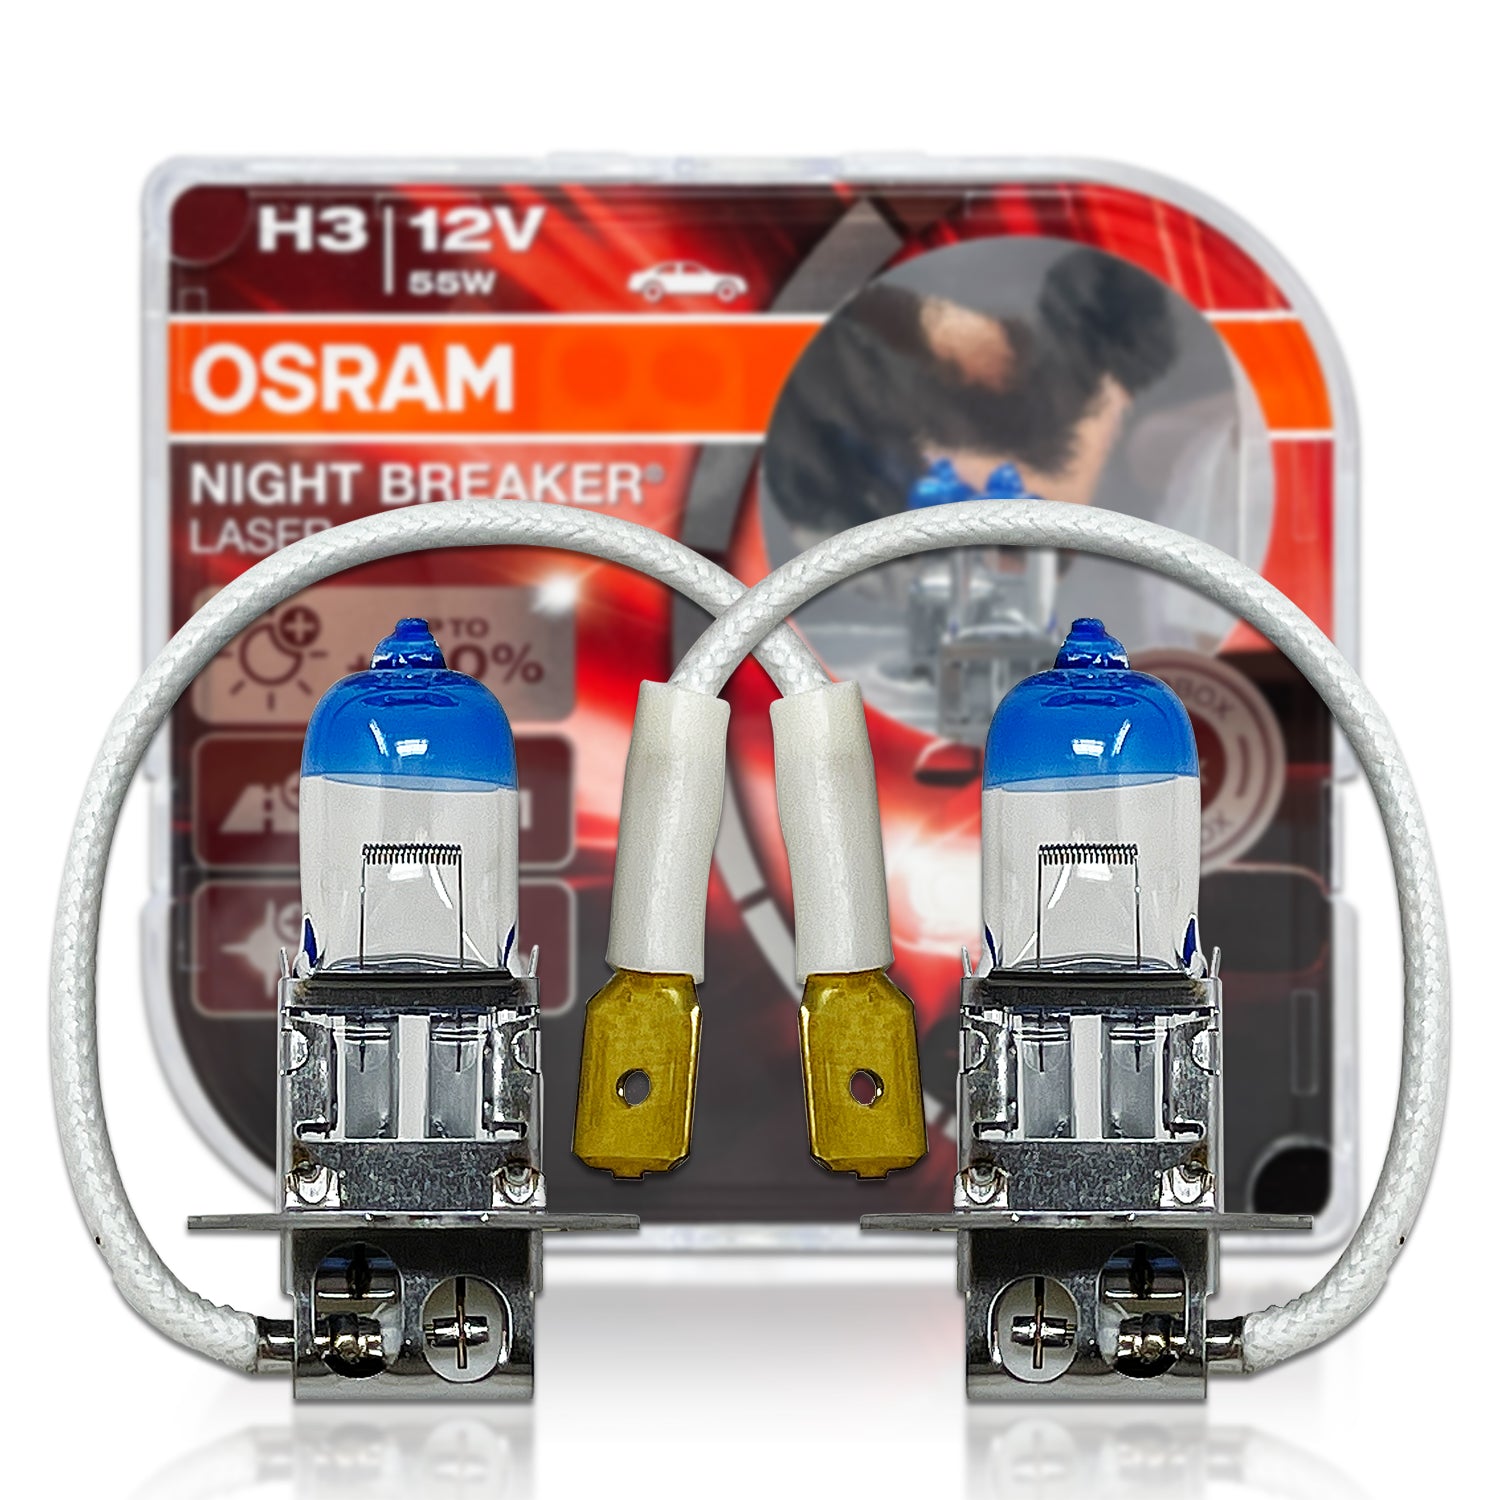 OSRAM Night Breaker LASER Next Generation H3 +150% Xenon White Car